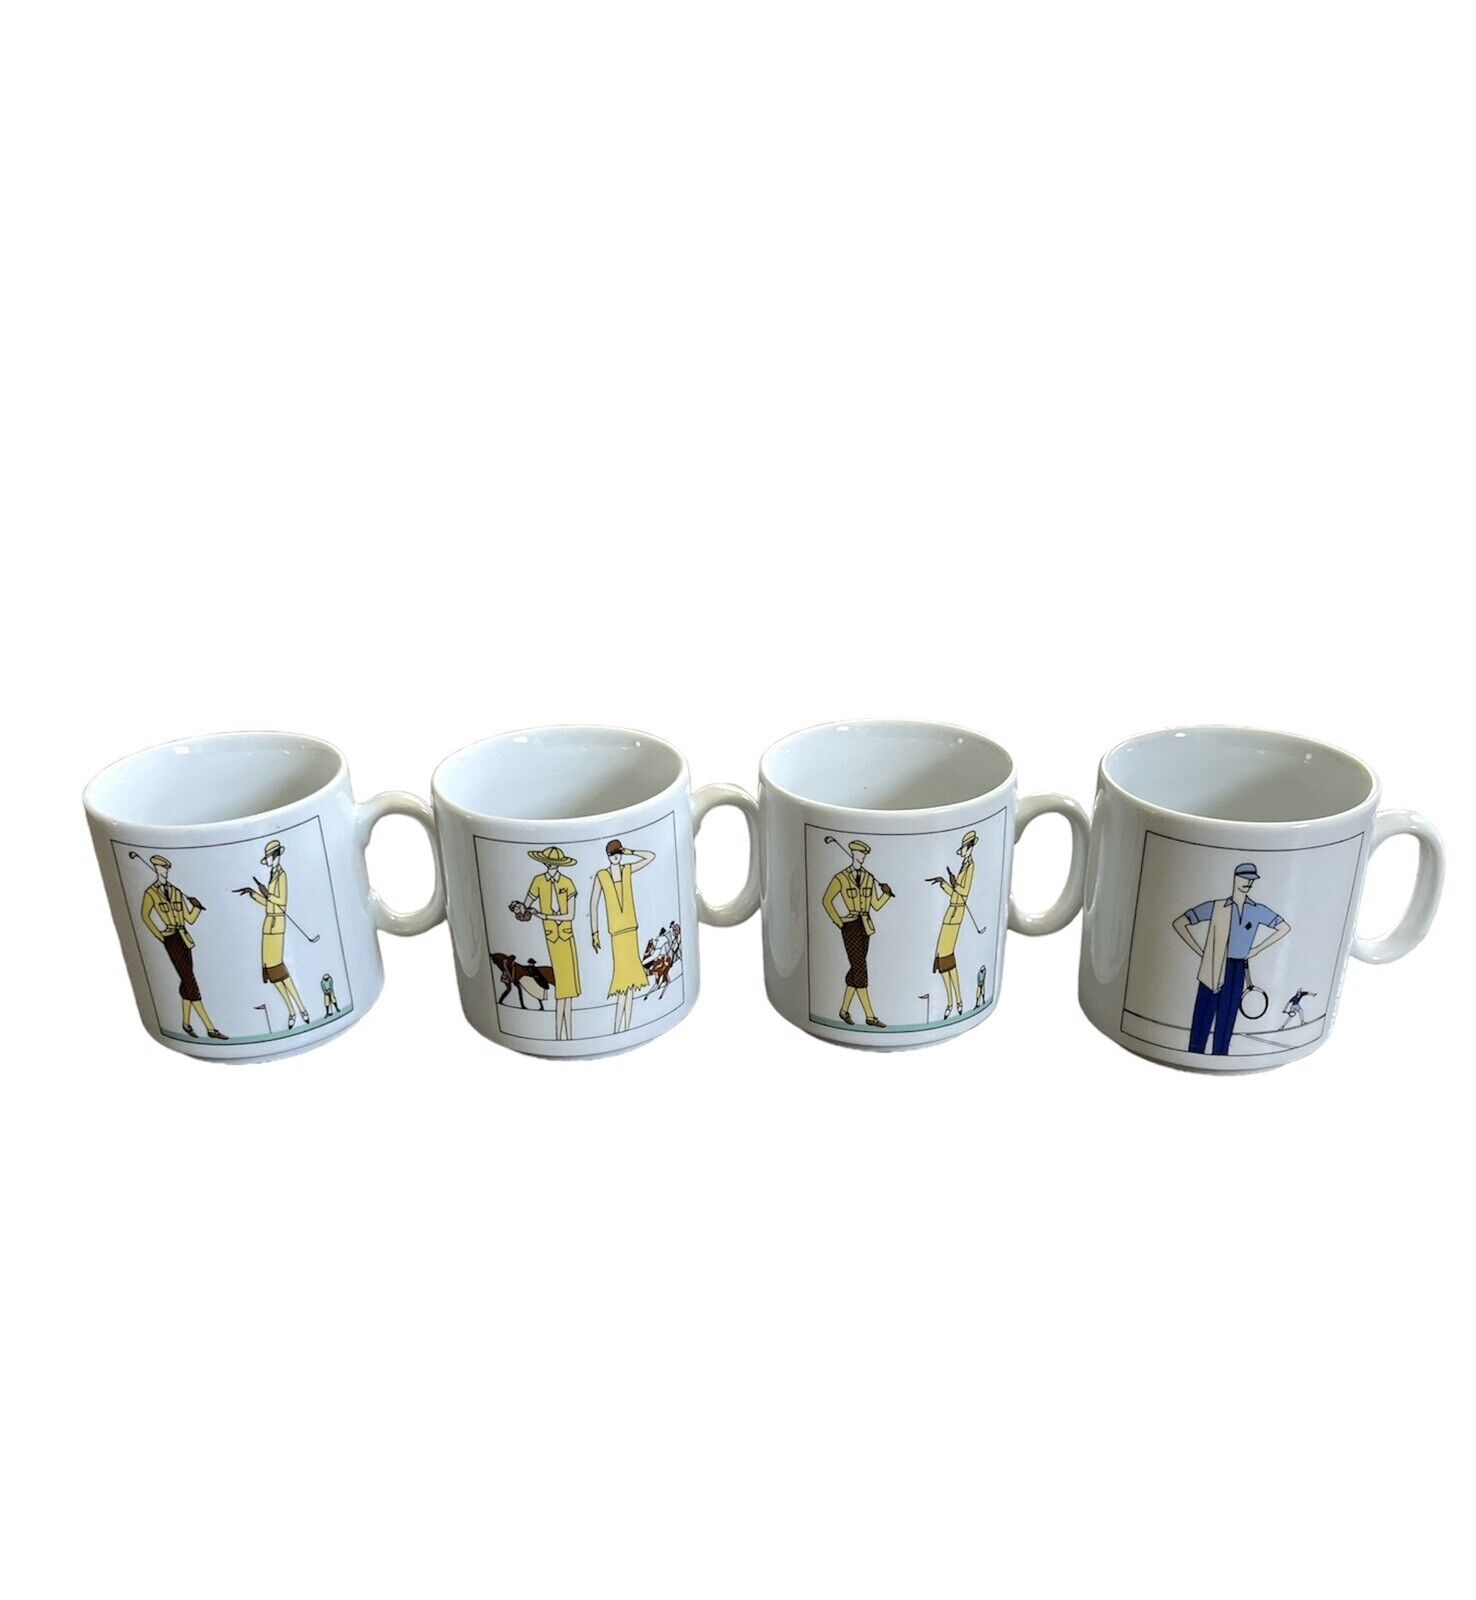 Vintage Porcelain D’auteuil Art Deco Tea Cups Set Of 4 Made In France